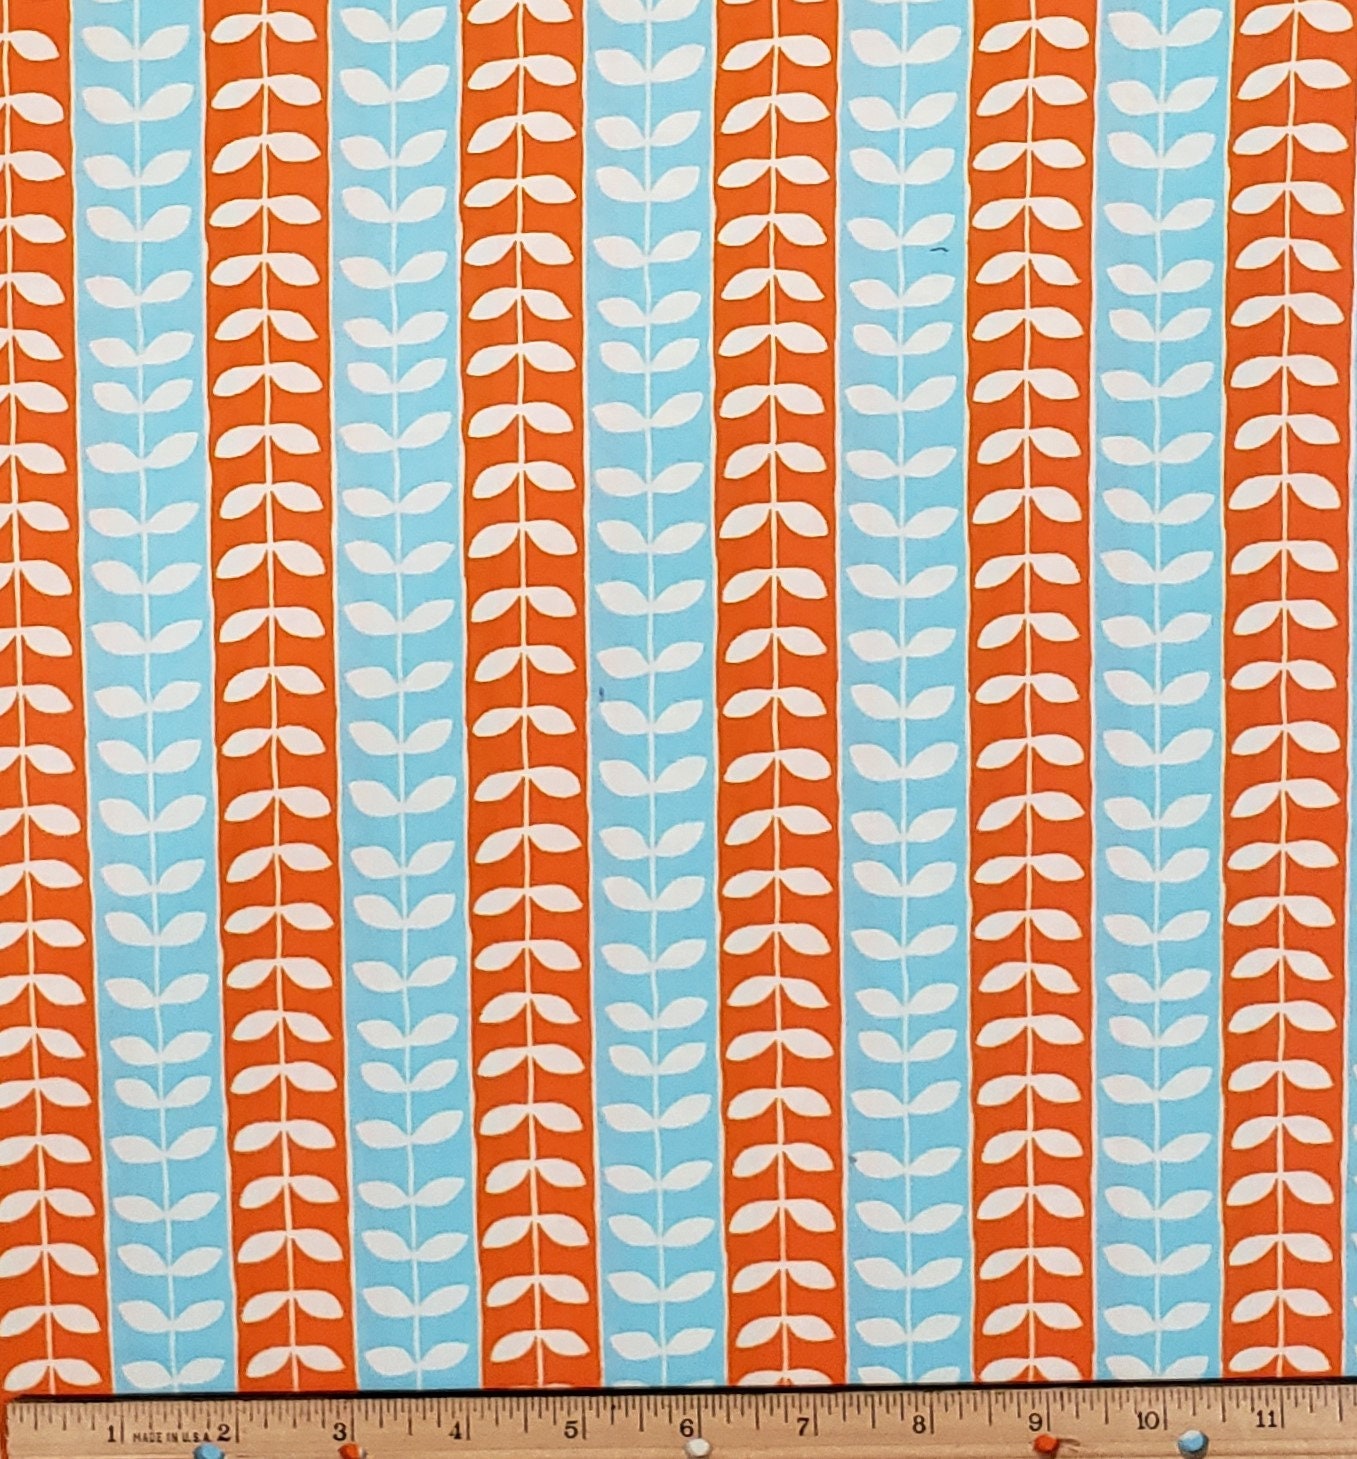 Monaluna for Robert Kaufman Mingle Screen Print D# 9871 - Light Blue and Orange Leaf Vine Print Fabric